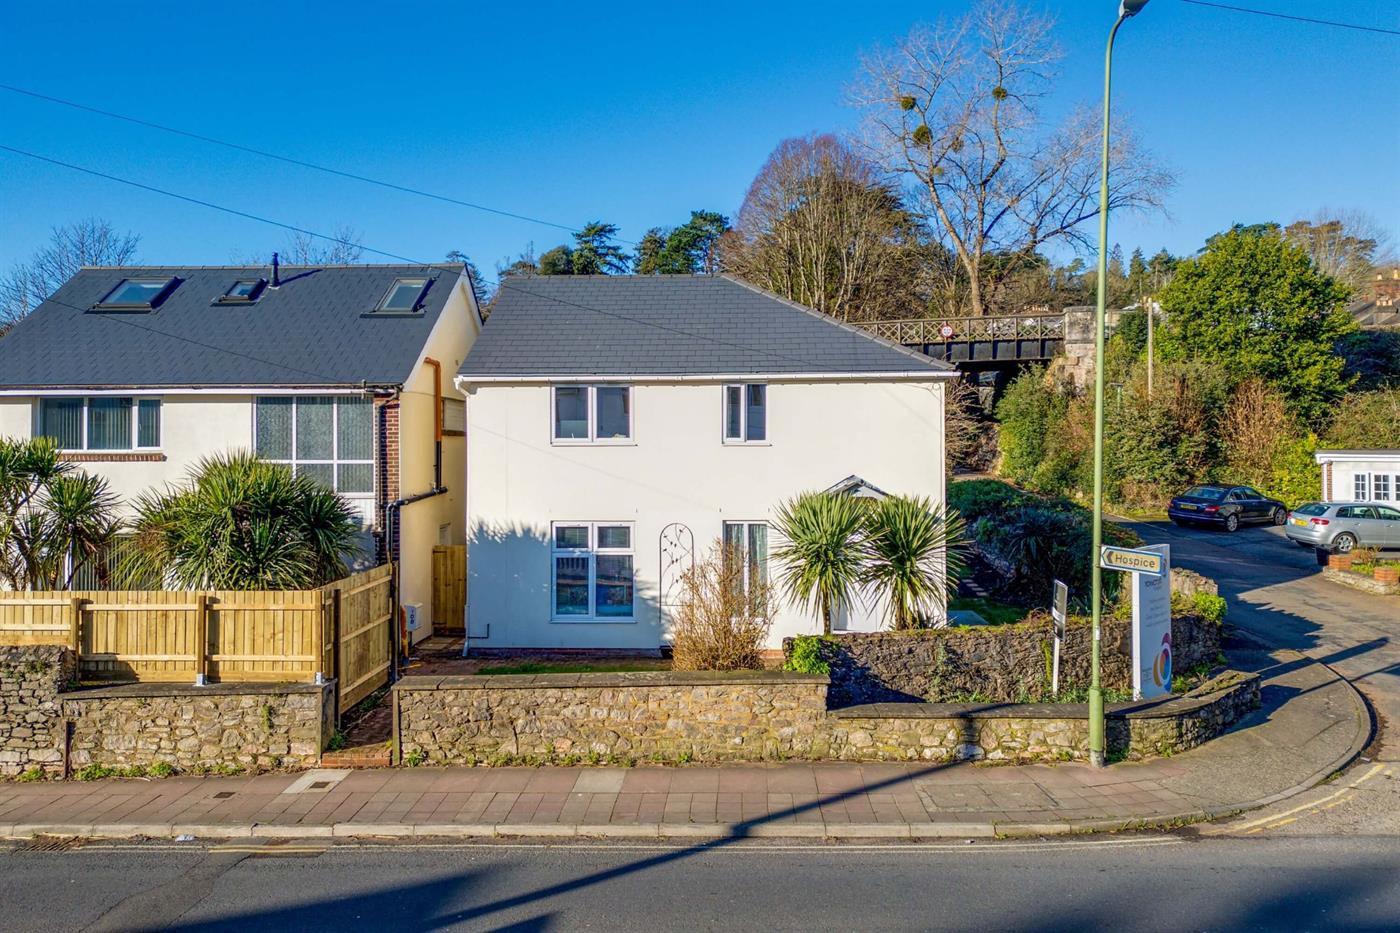 4 Bedroom Detached House to Rent (Let): Avenue Road, Torquay, TQ2 5LQ